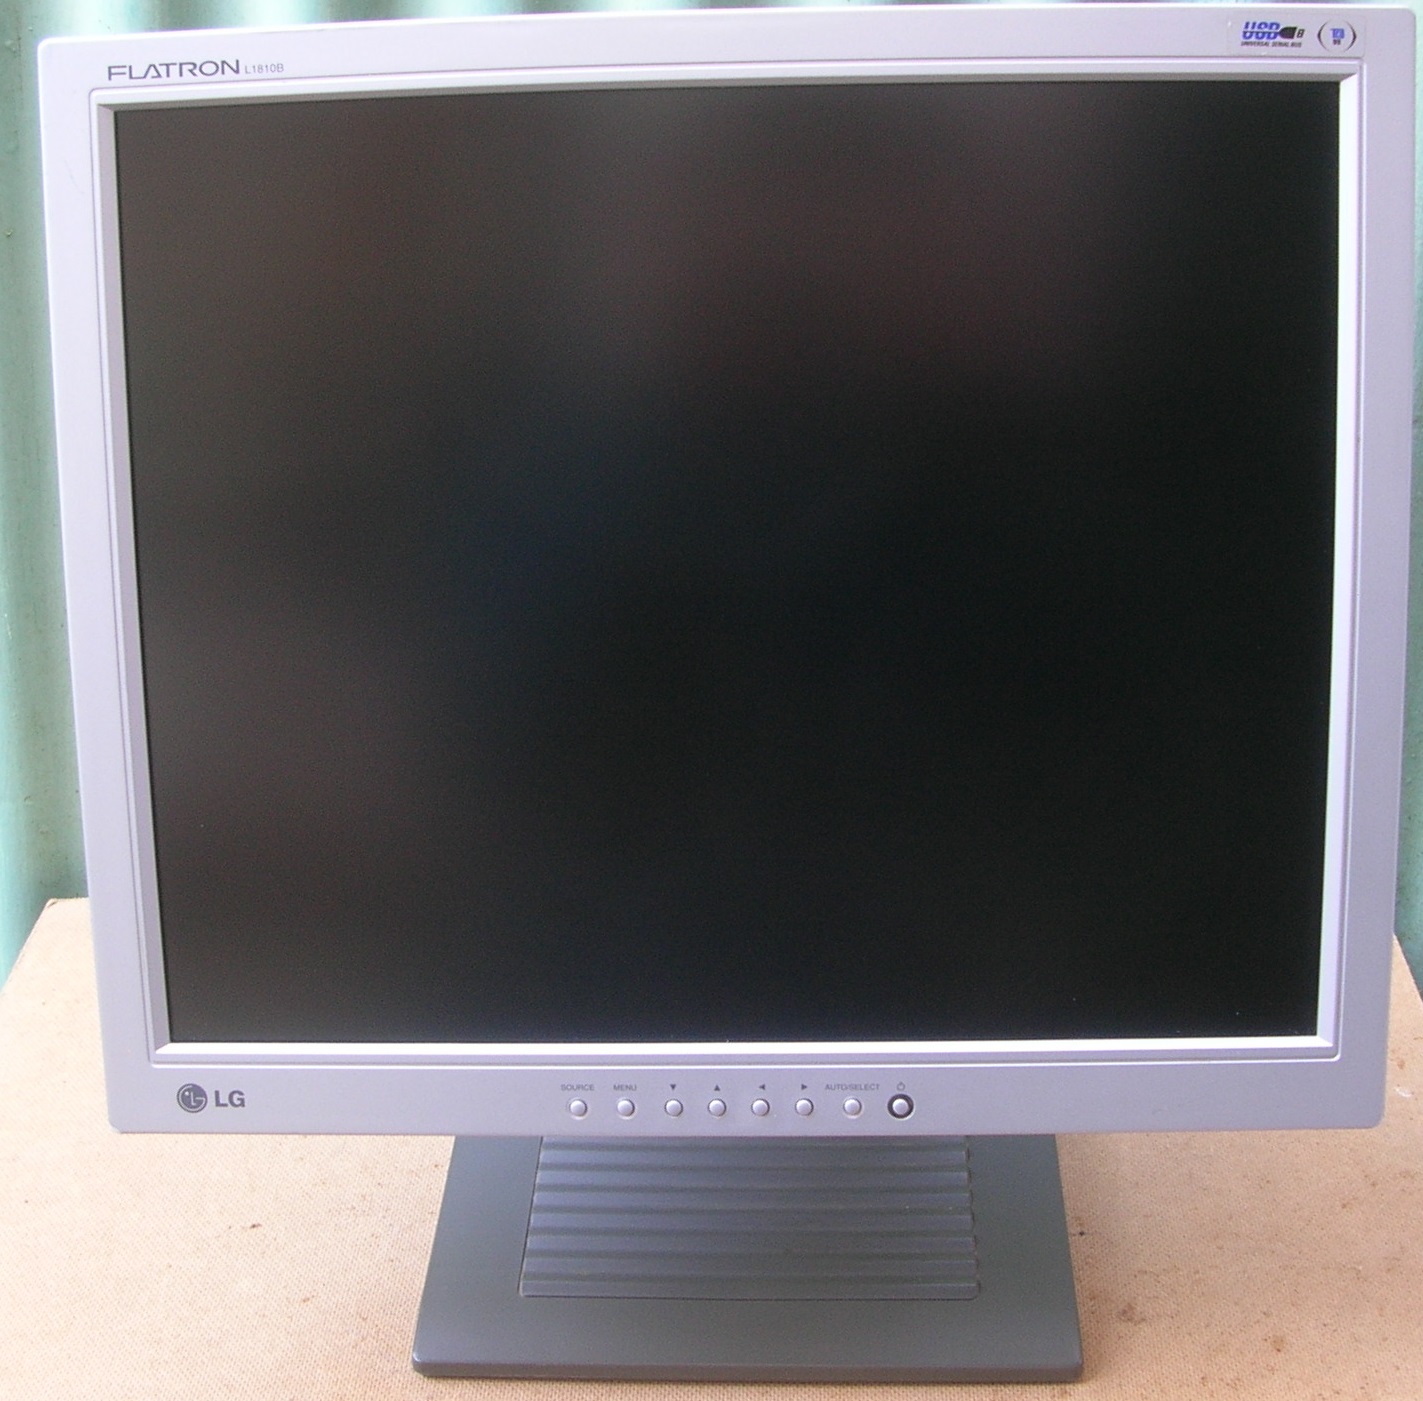 LG FLATRON L1810B 18.1" LCD MONITOR - Click Image to Close